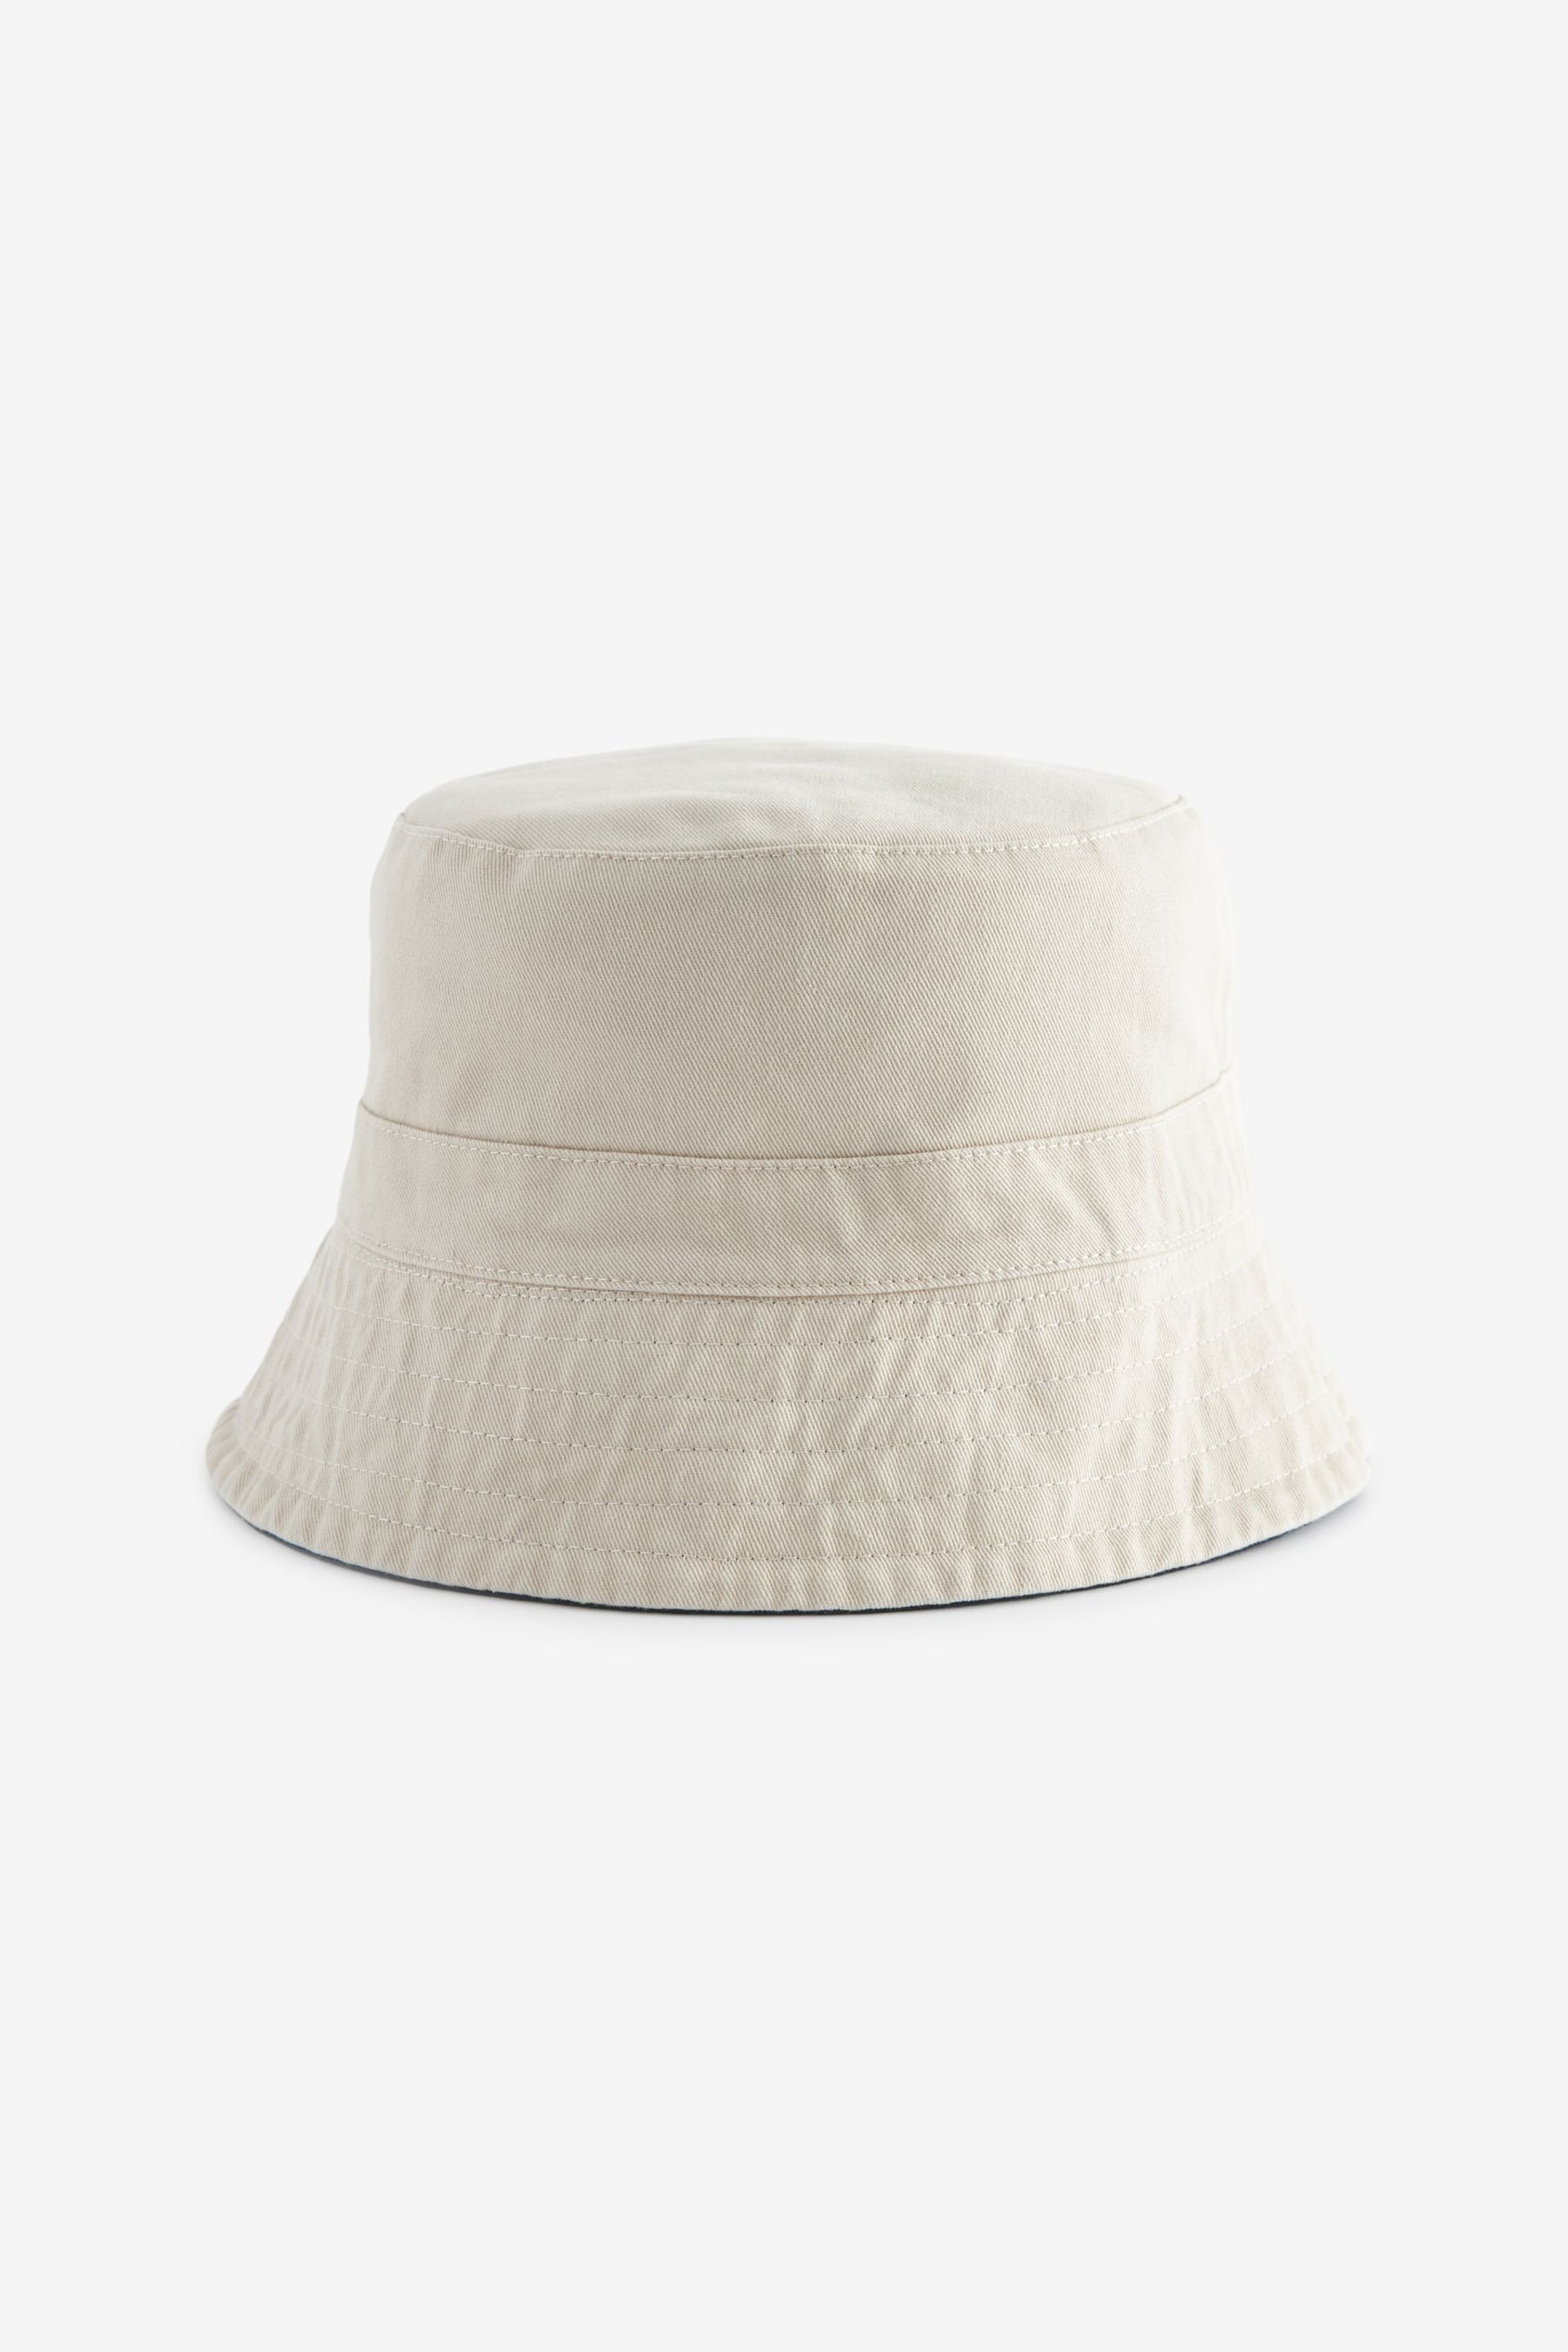 Navy Blue/Ecru White Reversible Bucket Hat - Image 6 of 6